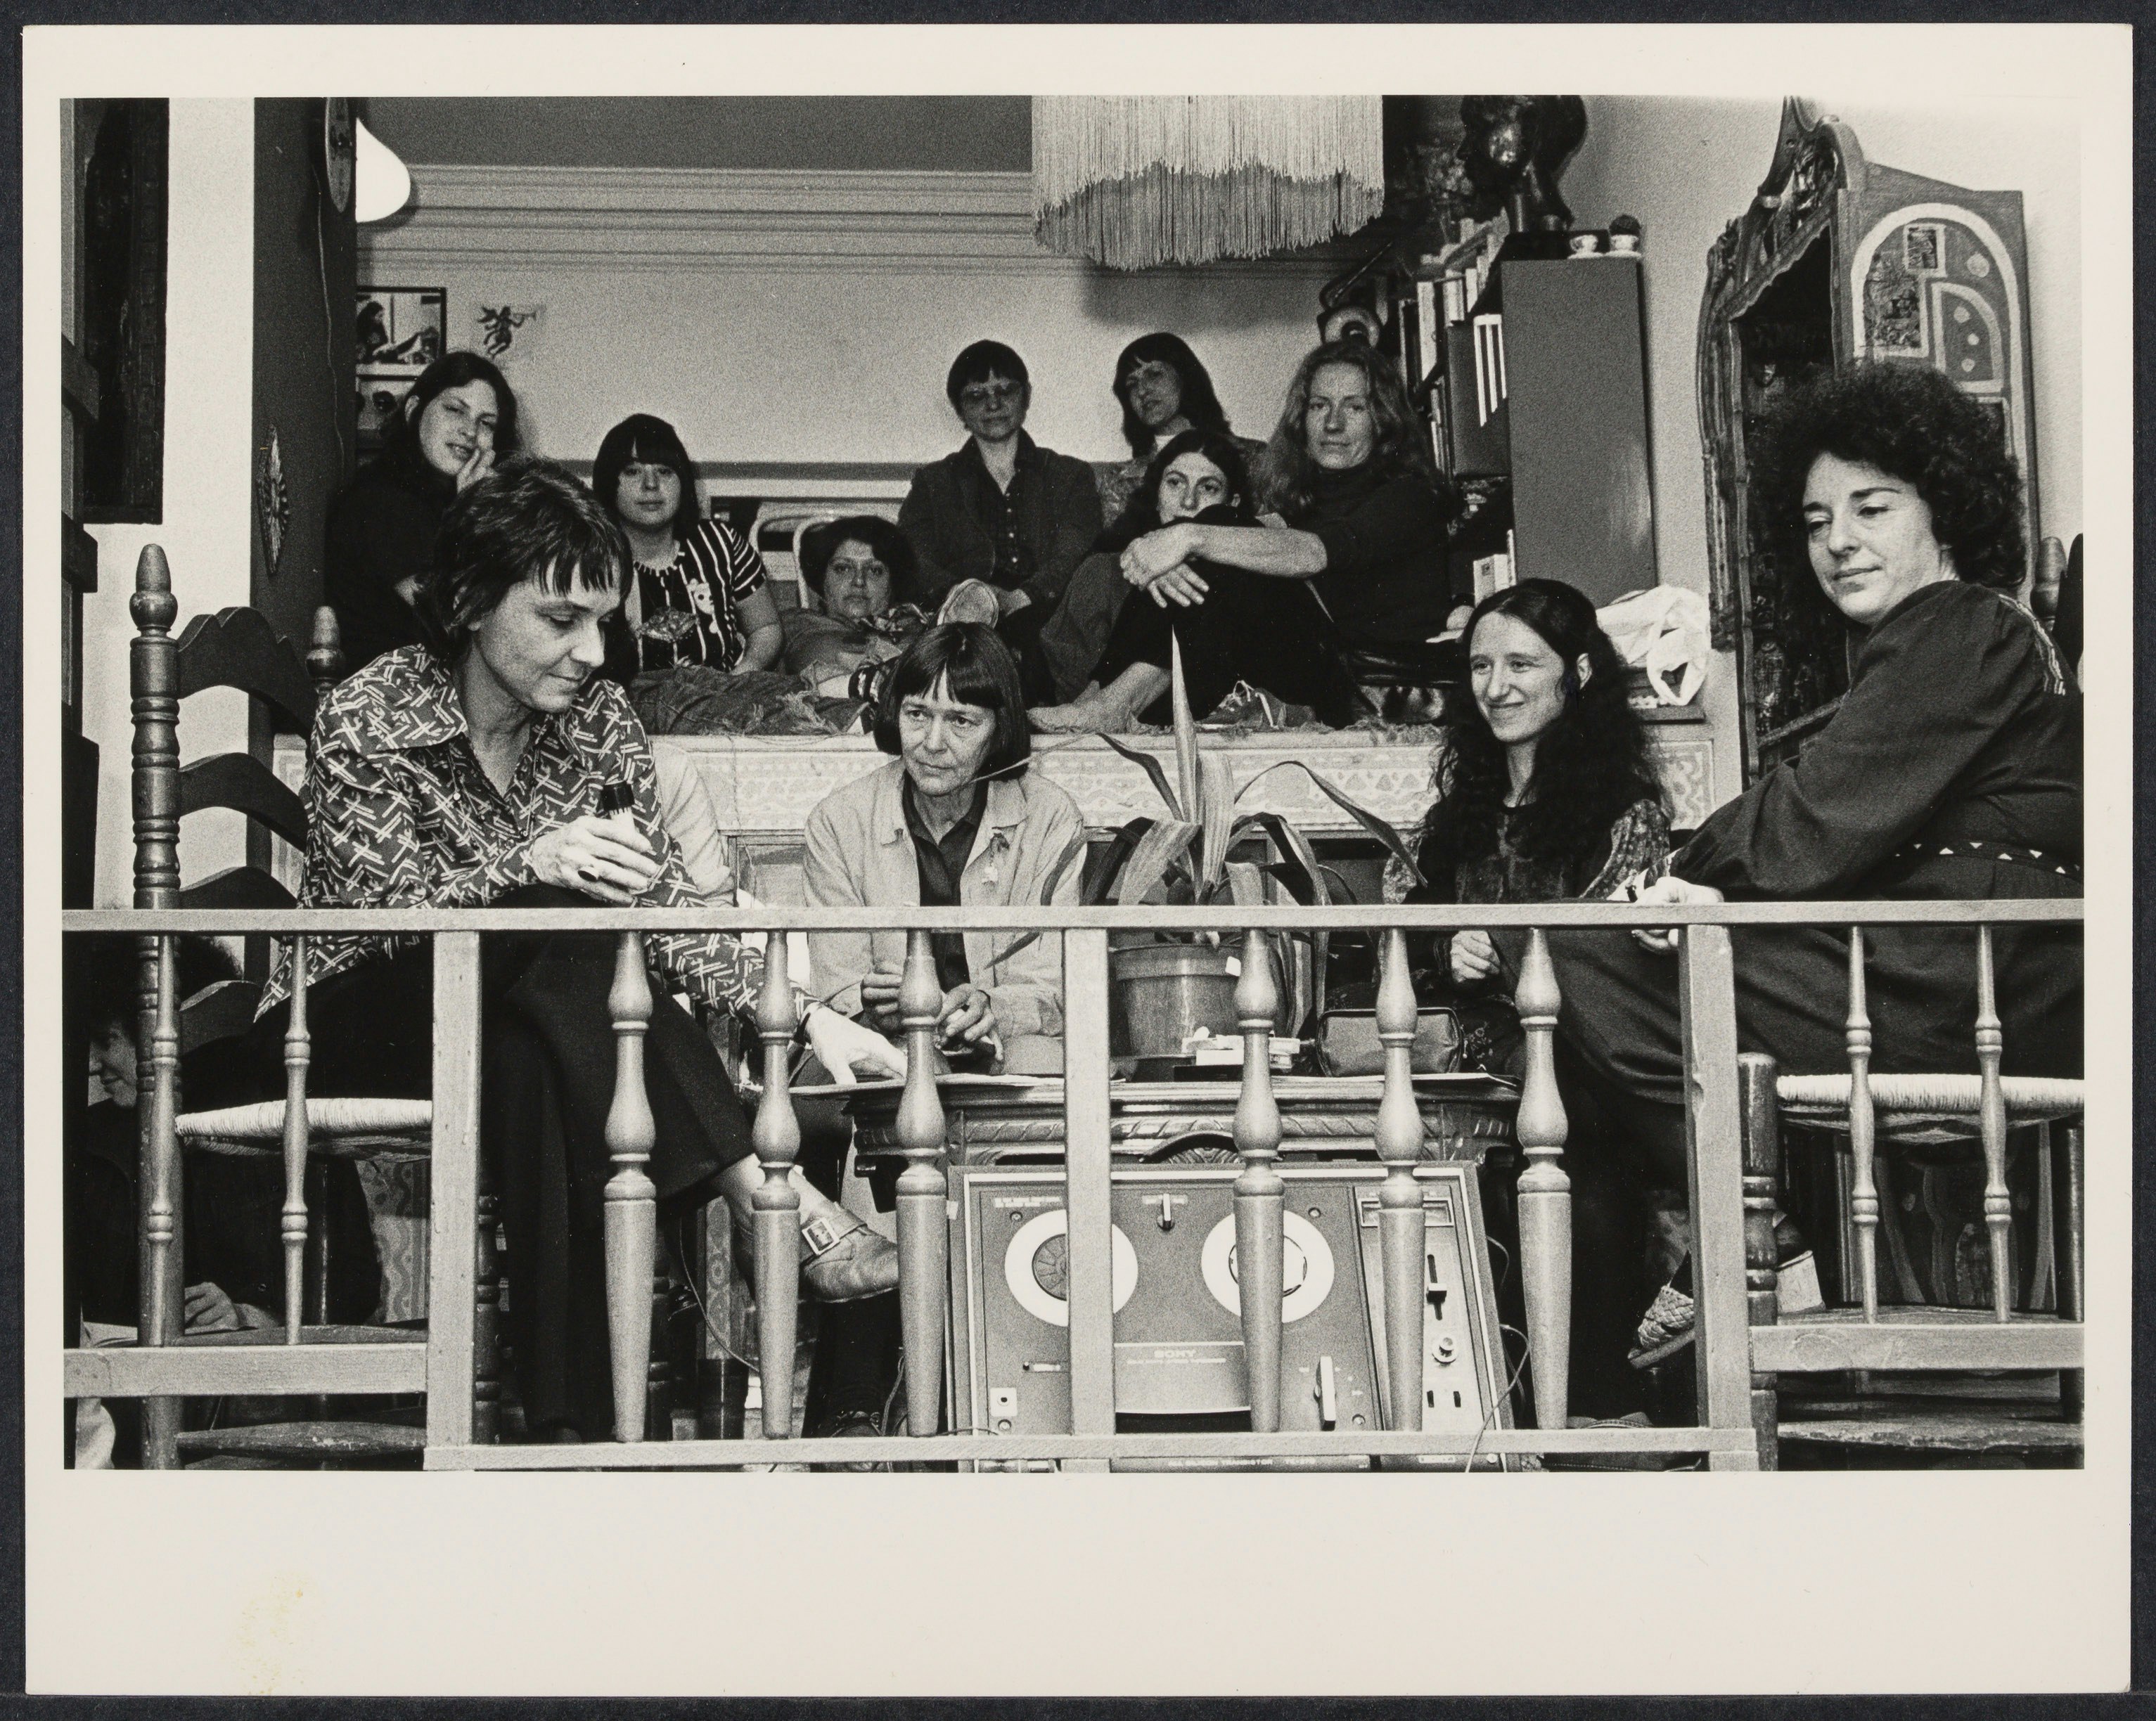 Left to right: Adrienne Rich, Barbara Deming, Erika Duncan, Glora Orenstein at the Woman's Salon